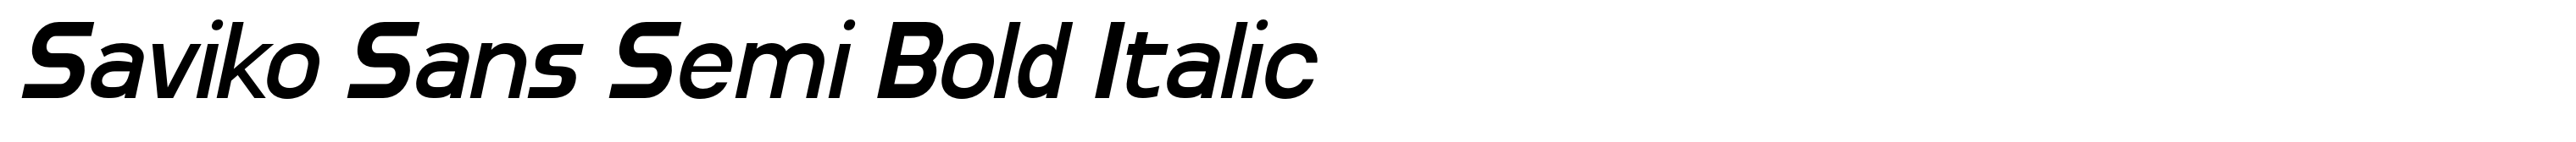 Saviko Sans Semi Bold Italic